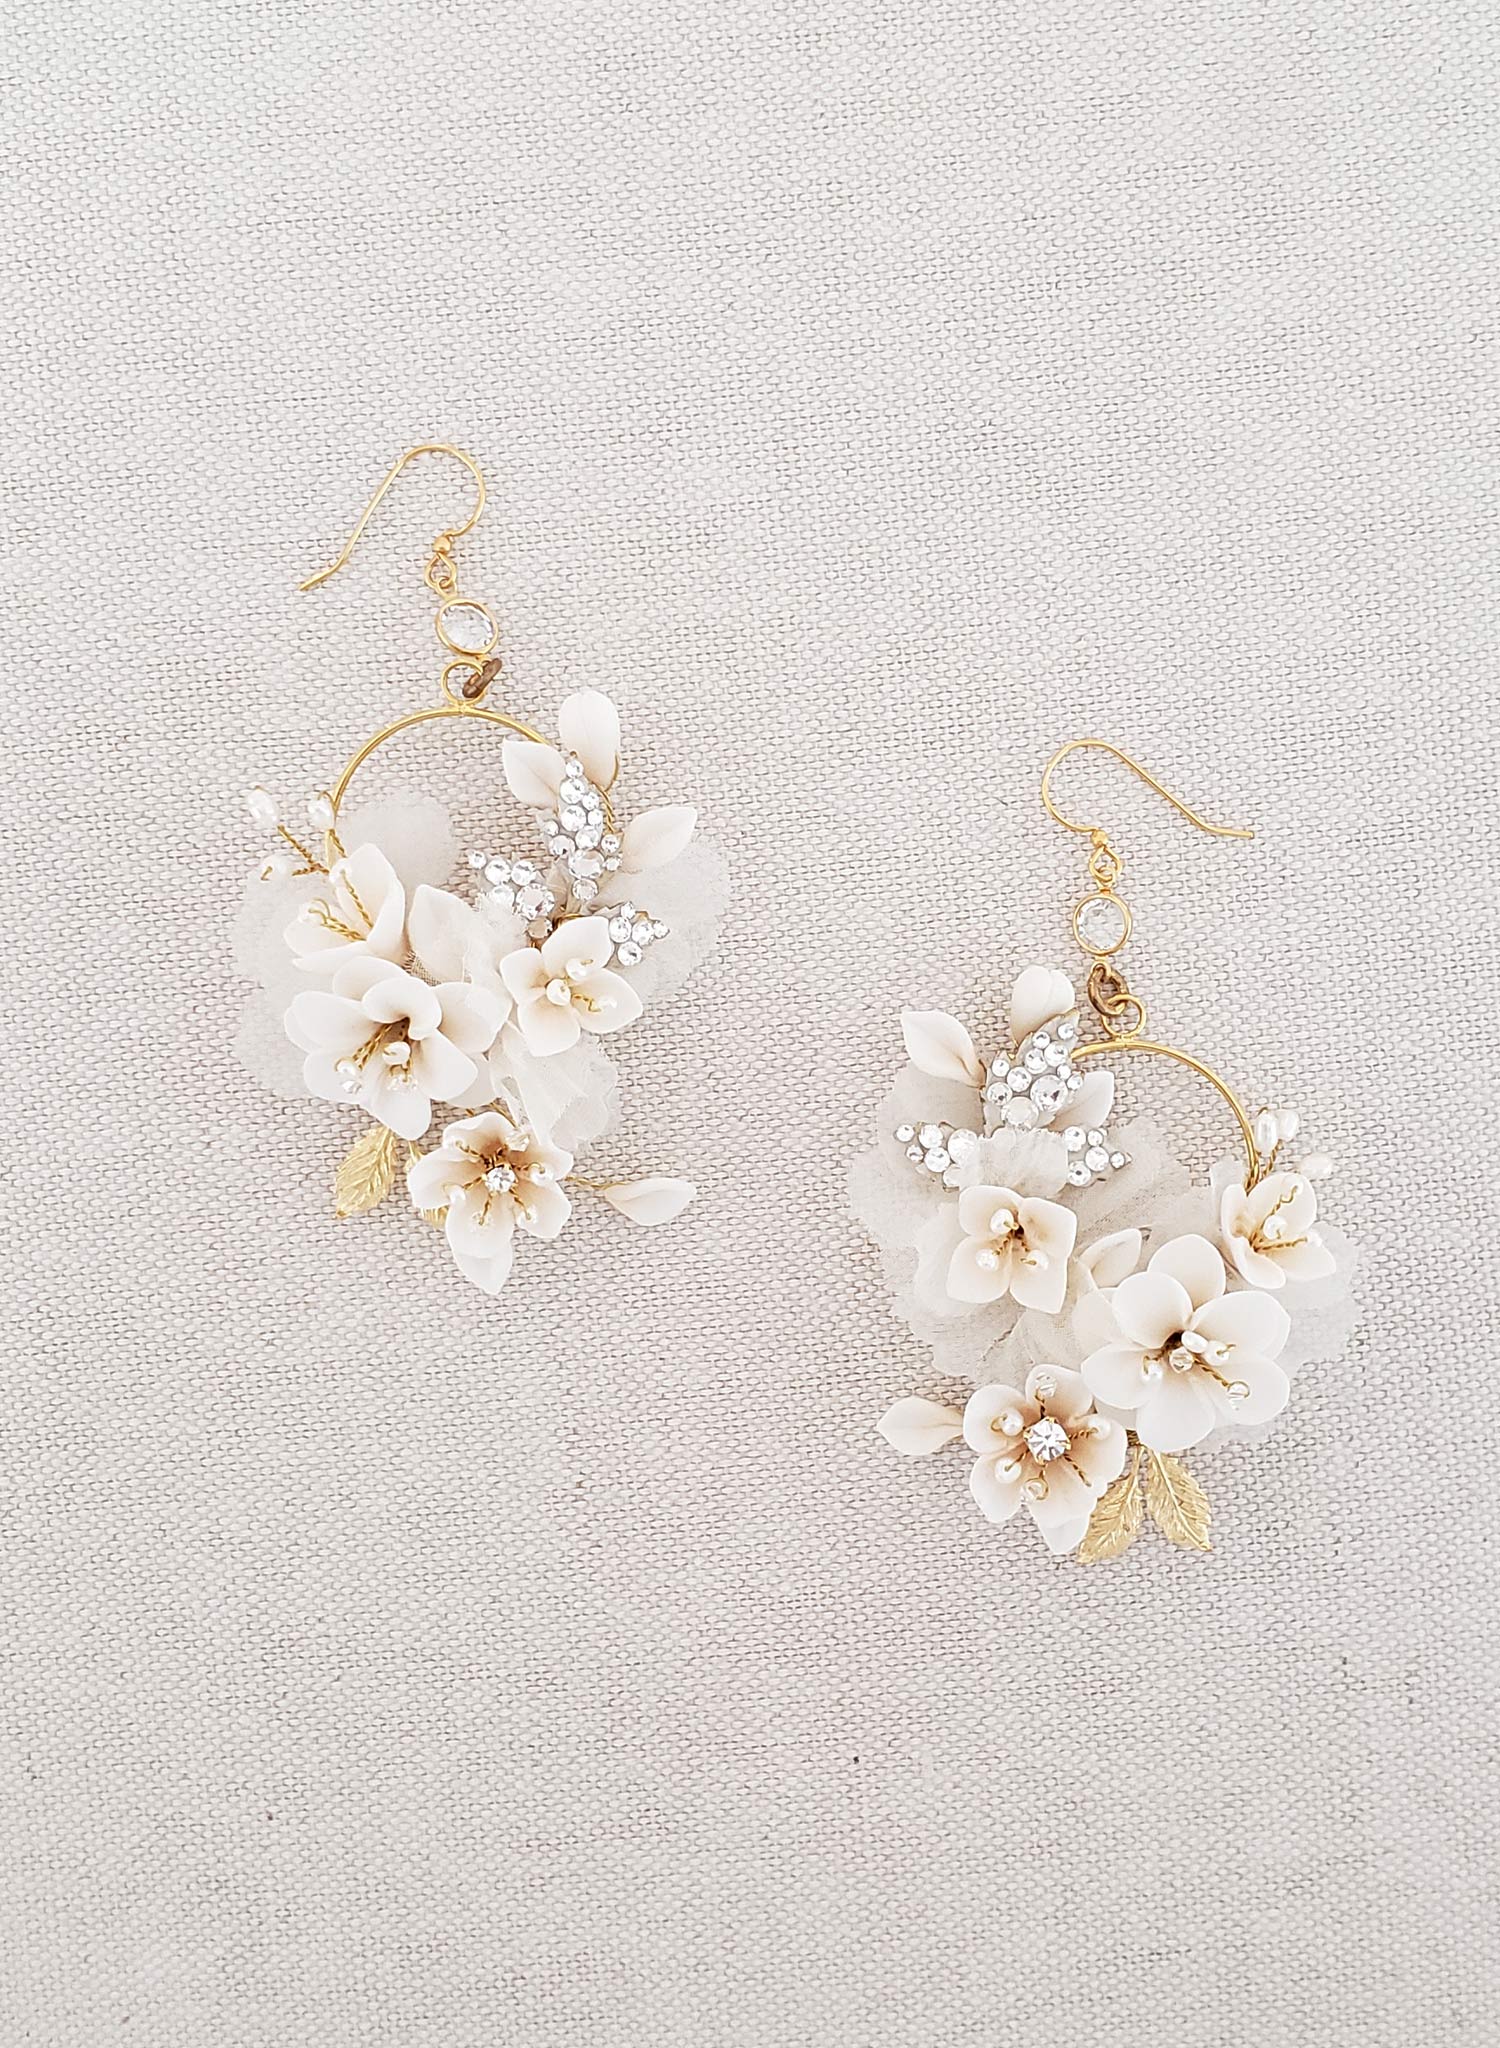 Clay flower bridal earrings - Creamy blossom and silk flower earrings -  Style #951